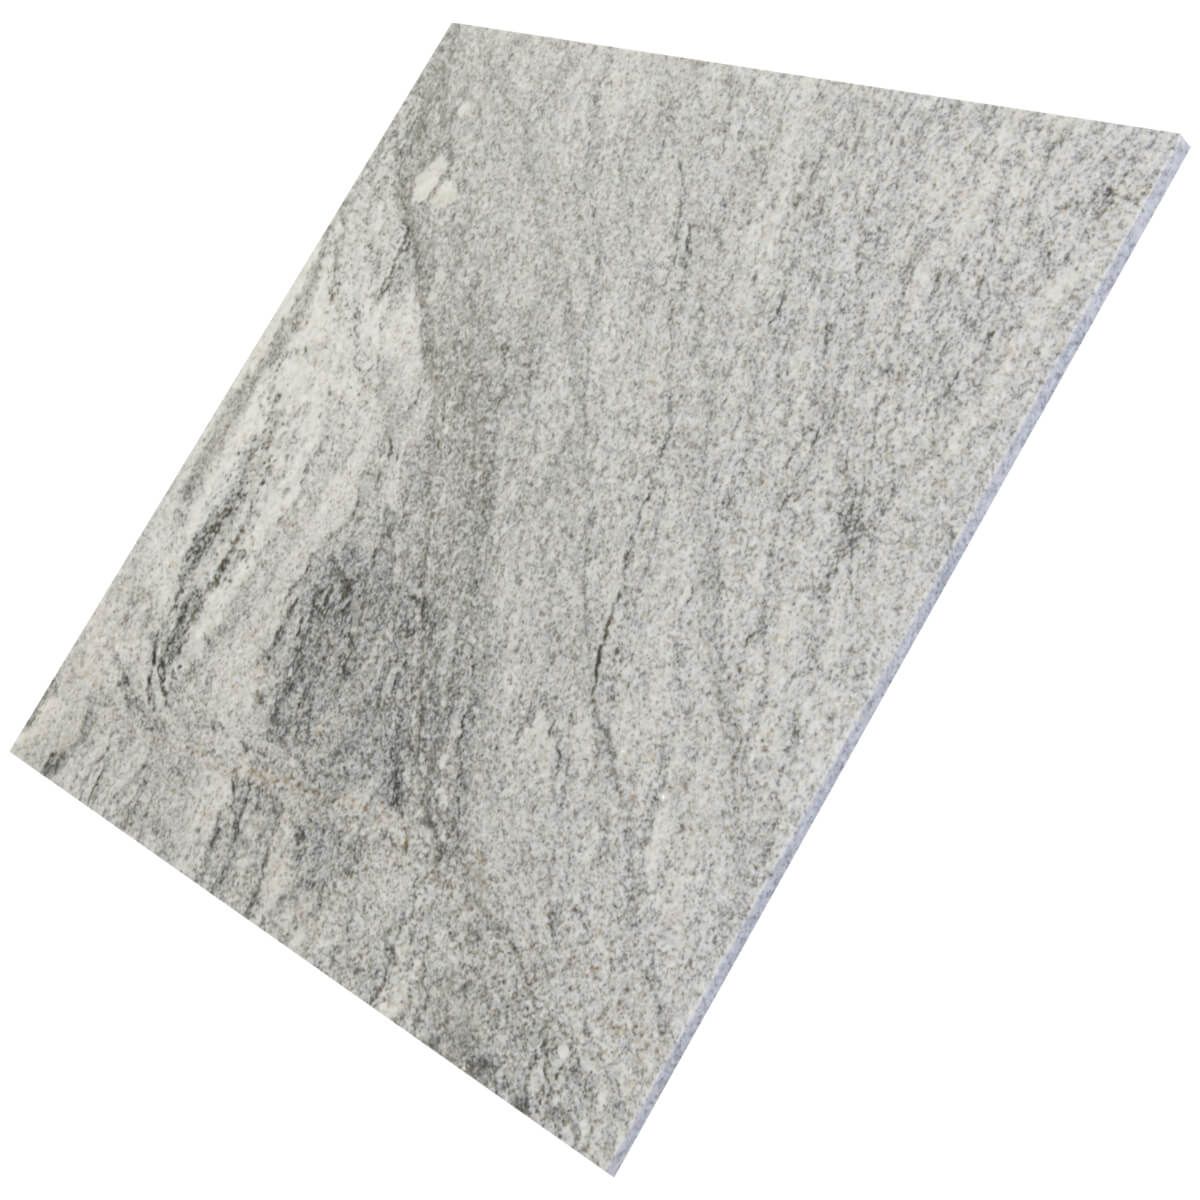 Płytki Granit Royal Juparana polerowany 60x60x1,5 cm